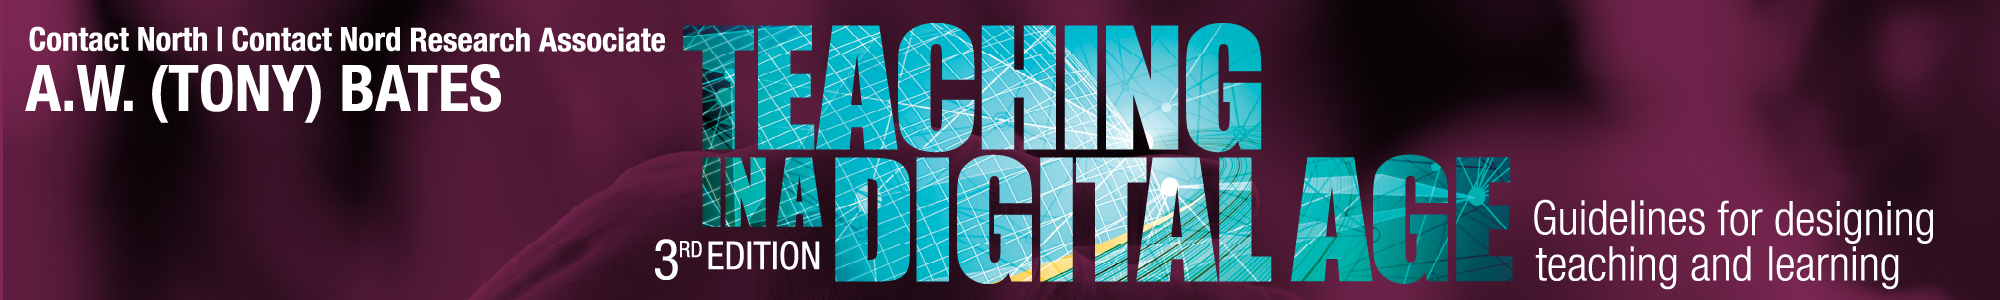 Teaching in a Digital Age banner photo